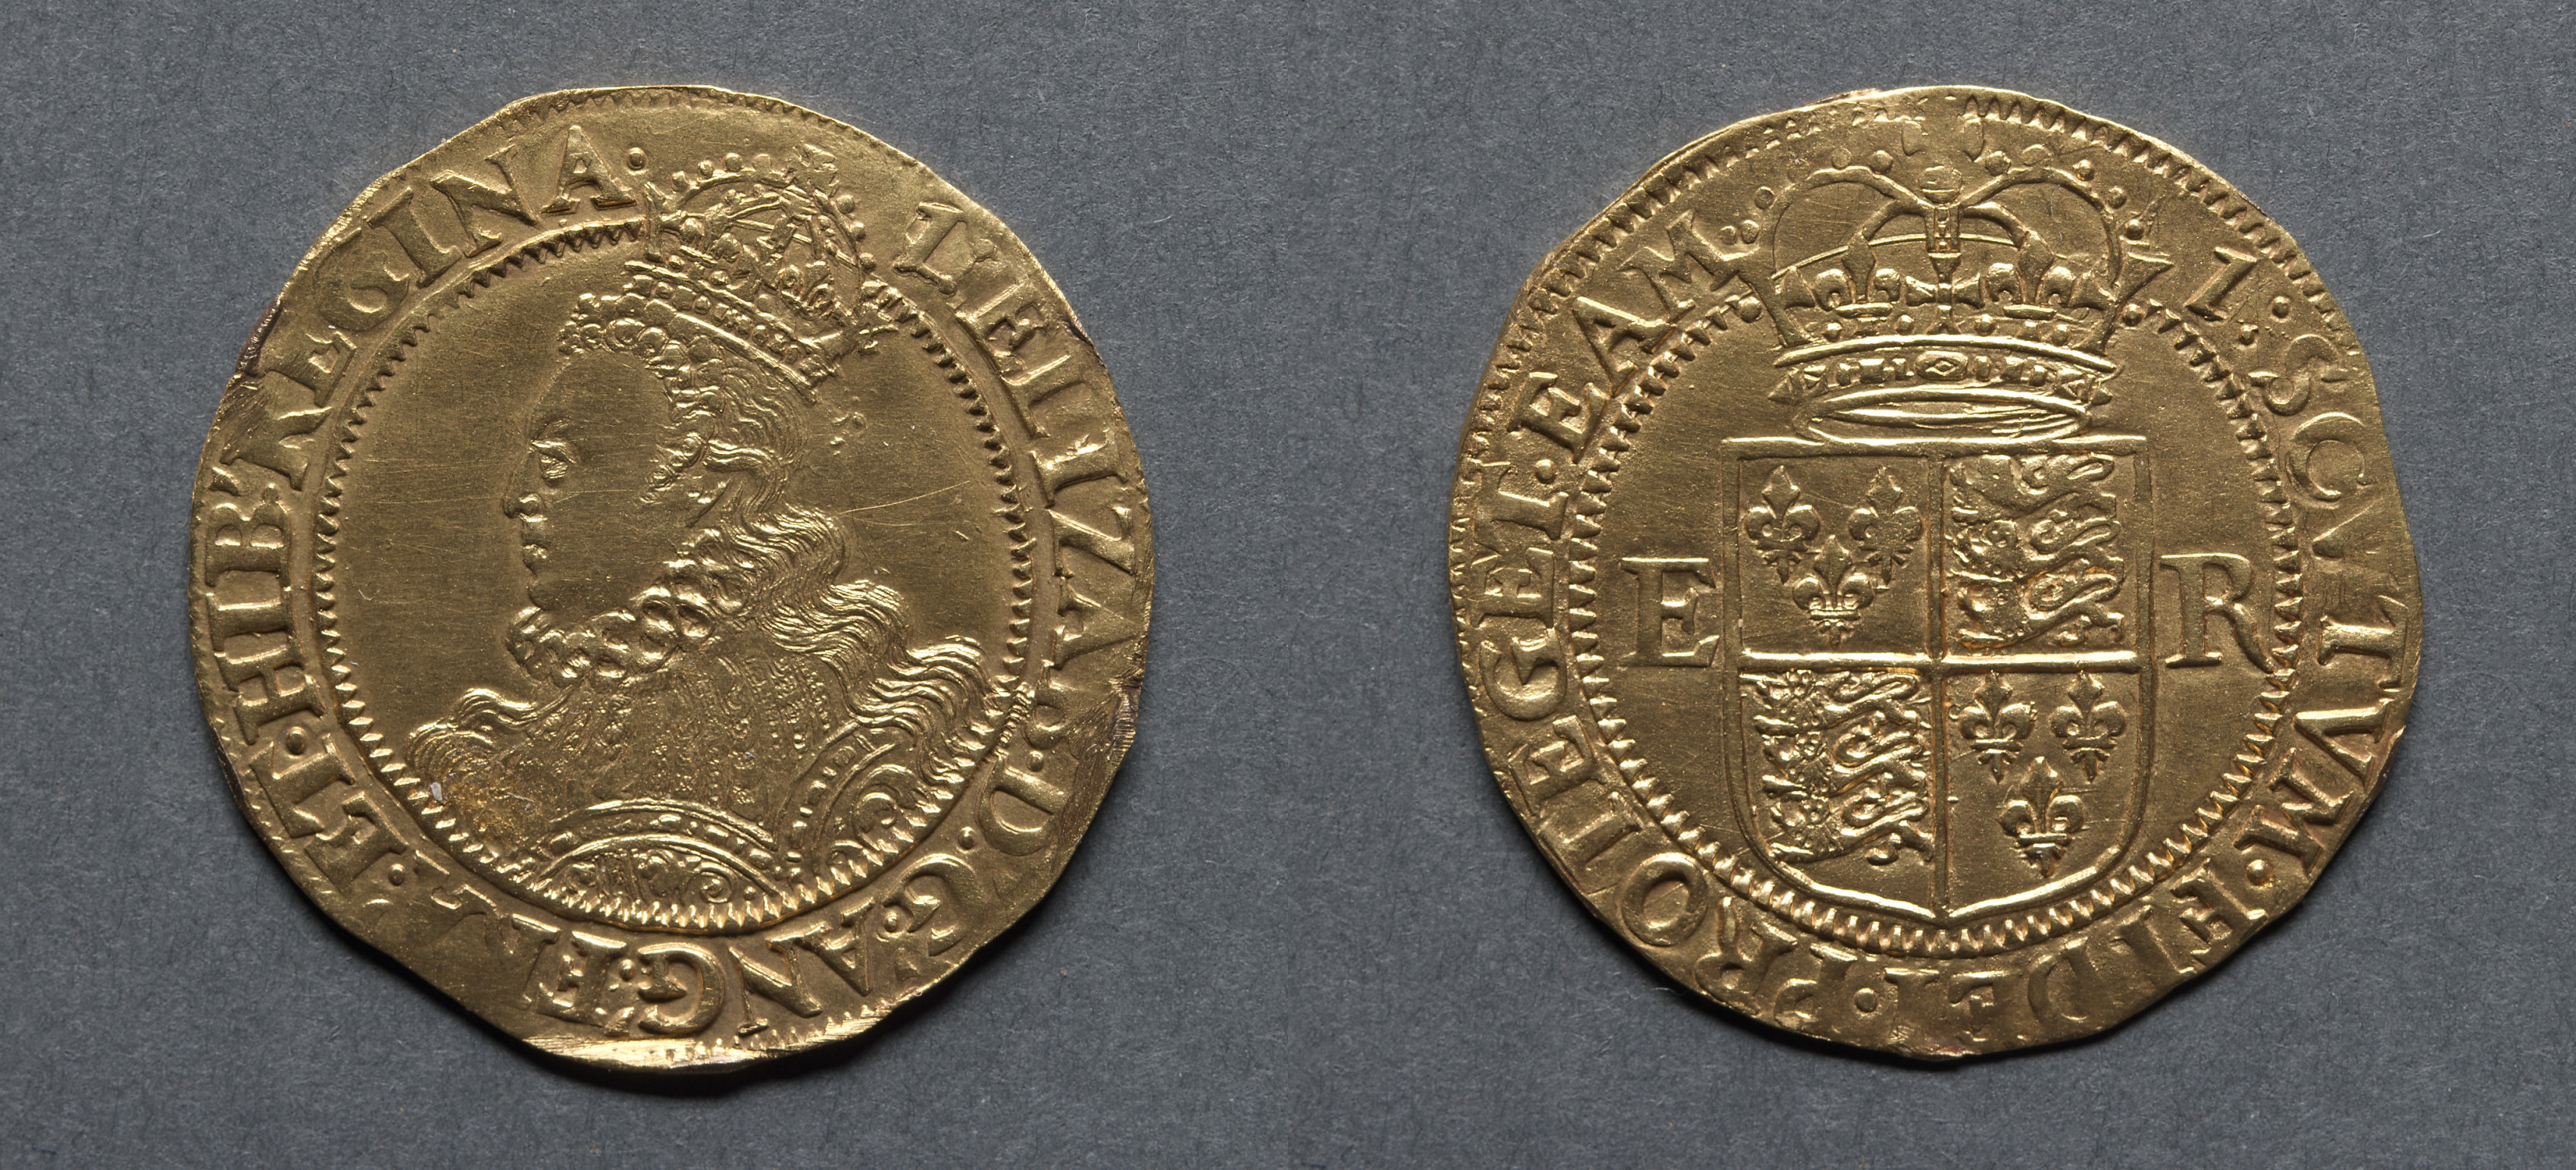 Half Pound: Elizabeth I (obverse); Crowned Shield of Arms (reverse)